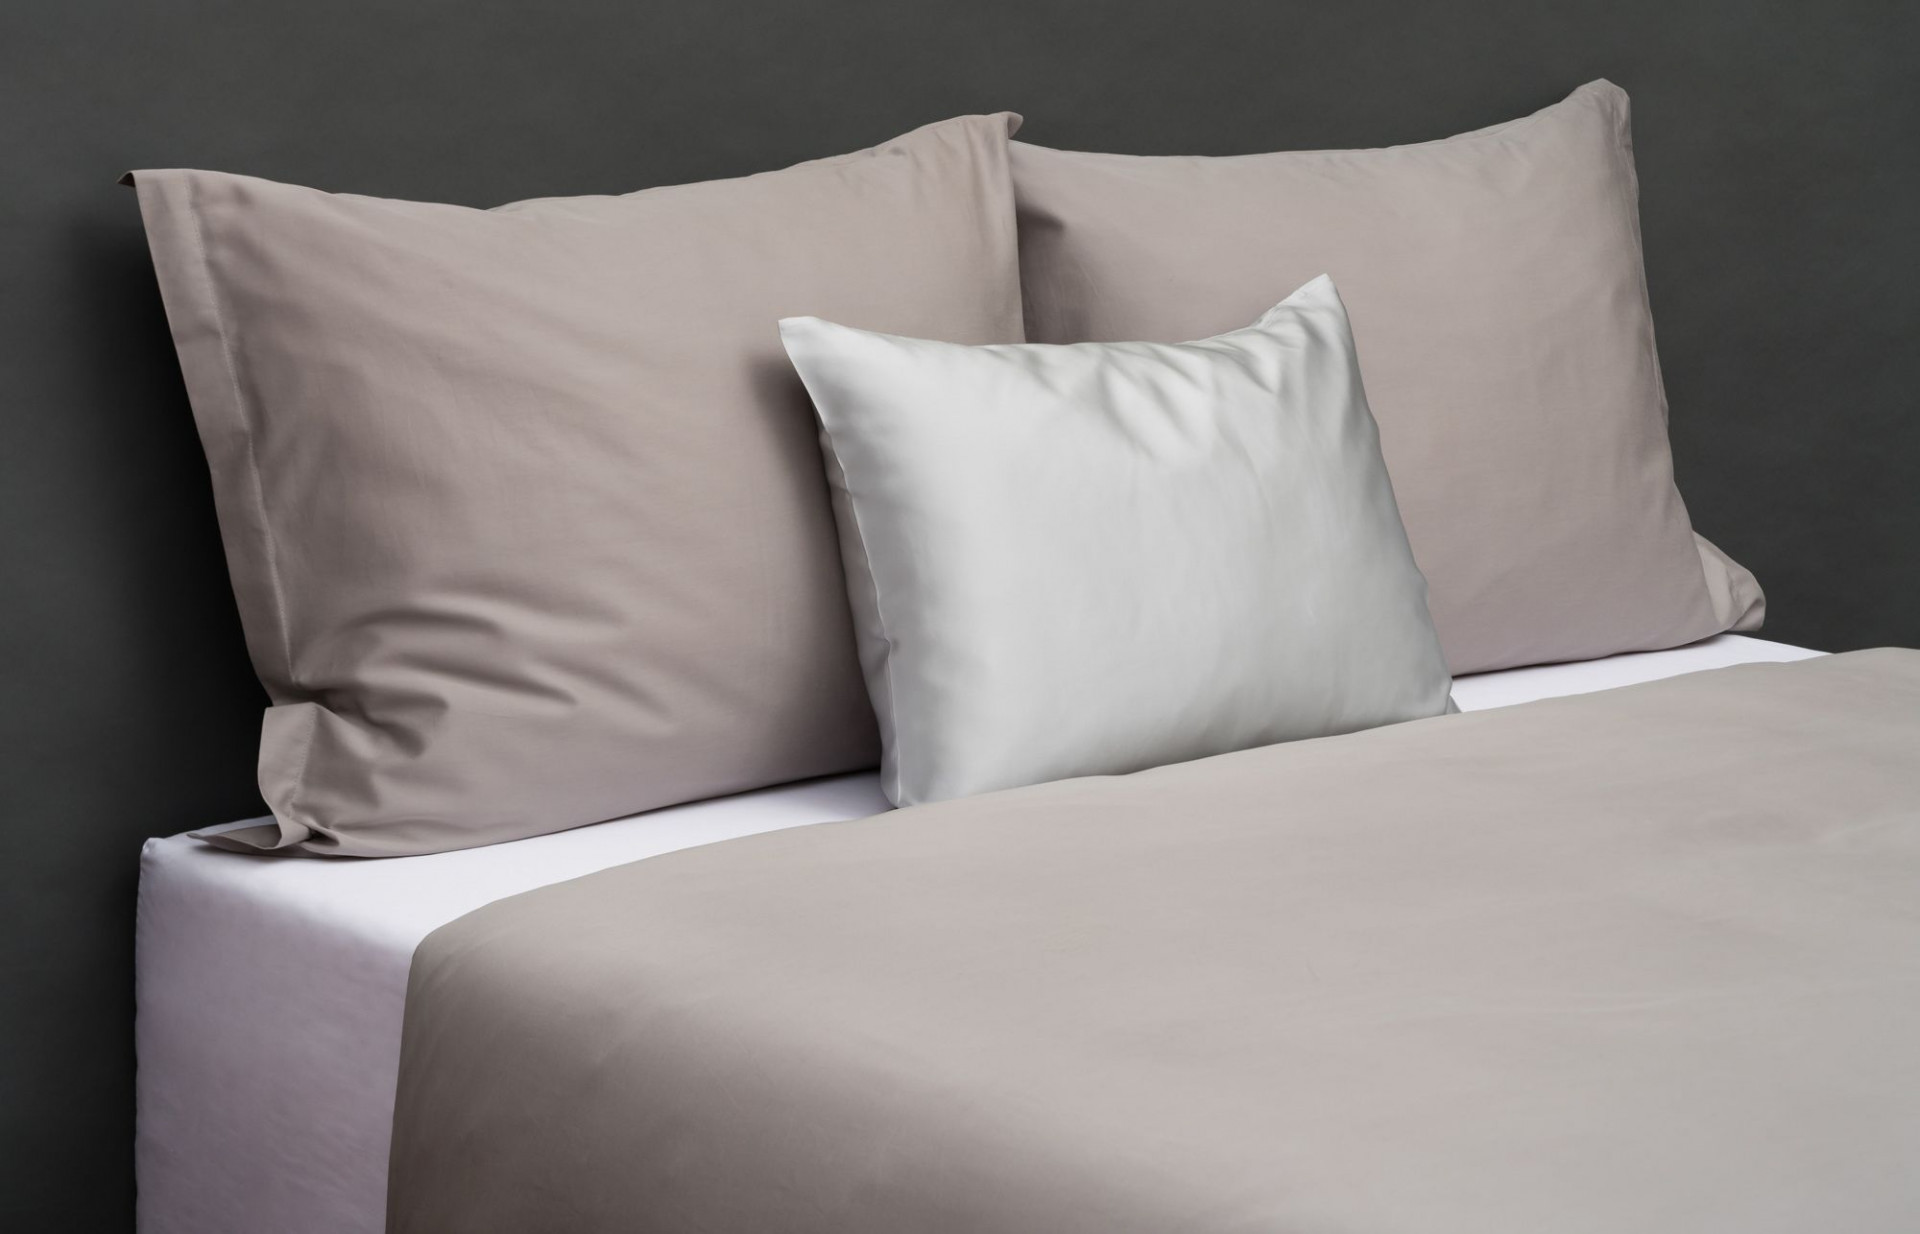 Delicate Silk pillowcase & Father's Playgroung bedding collection.